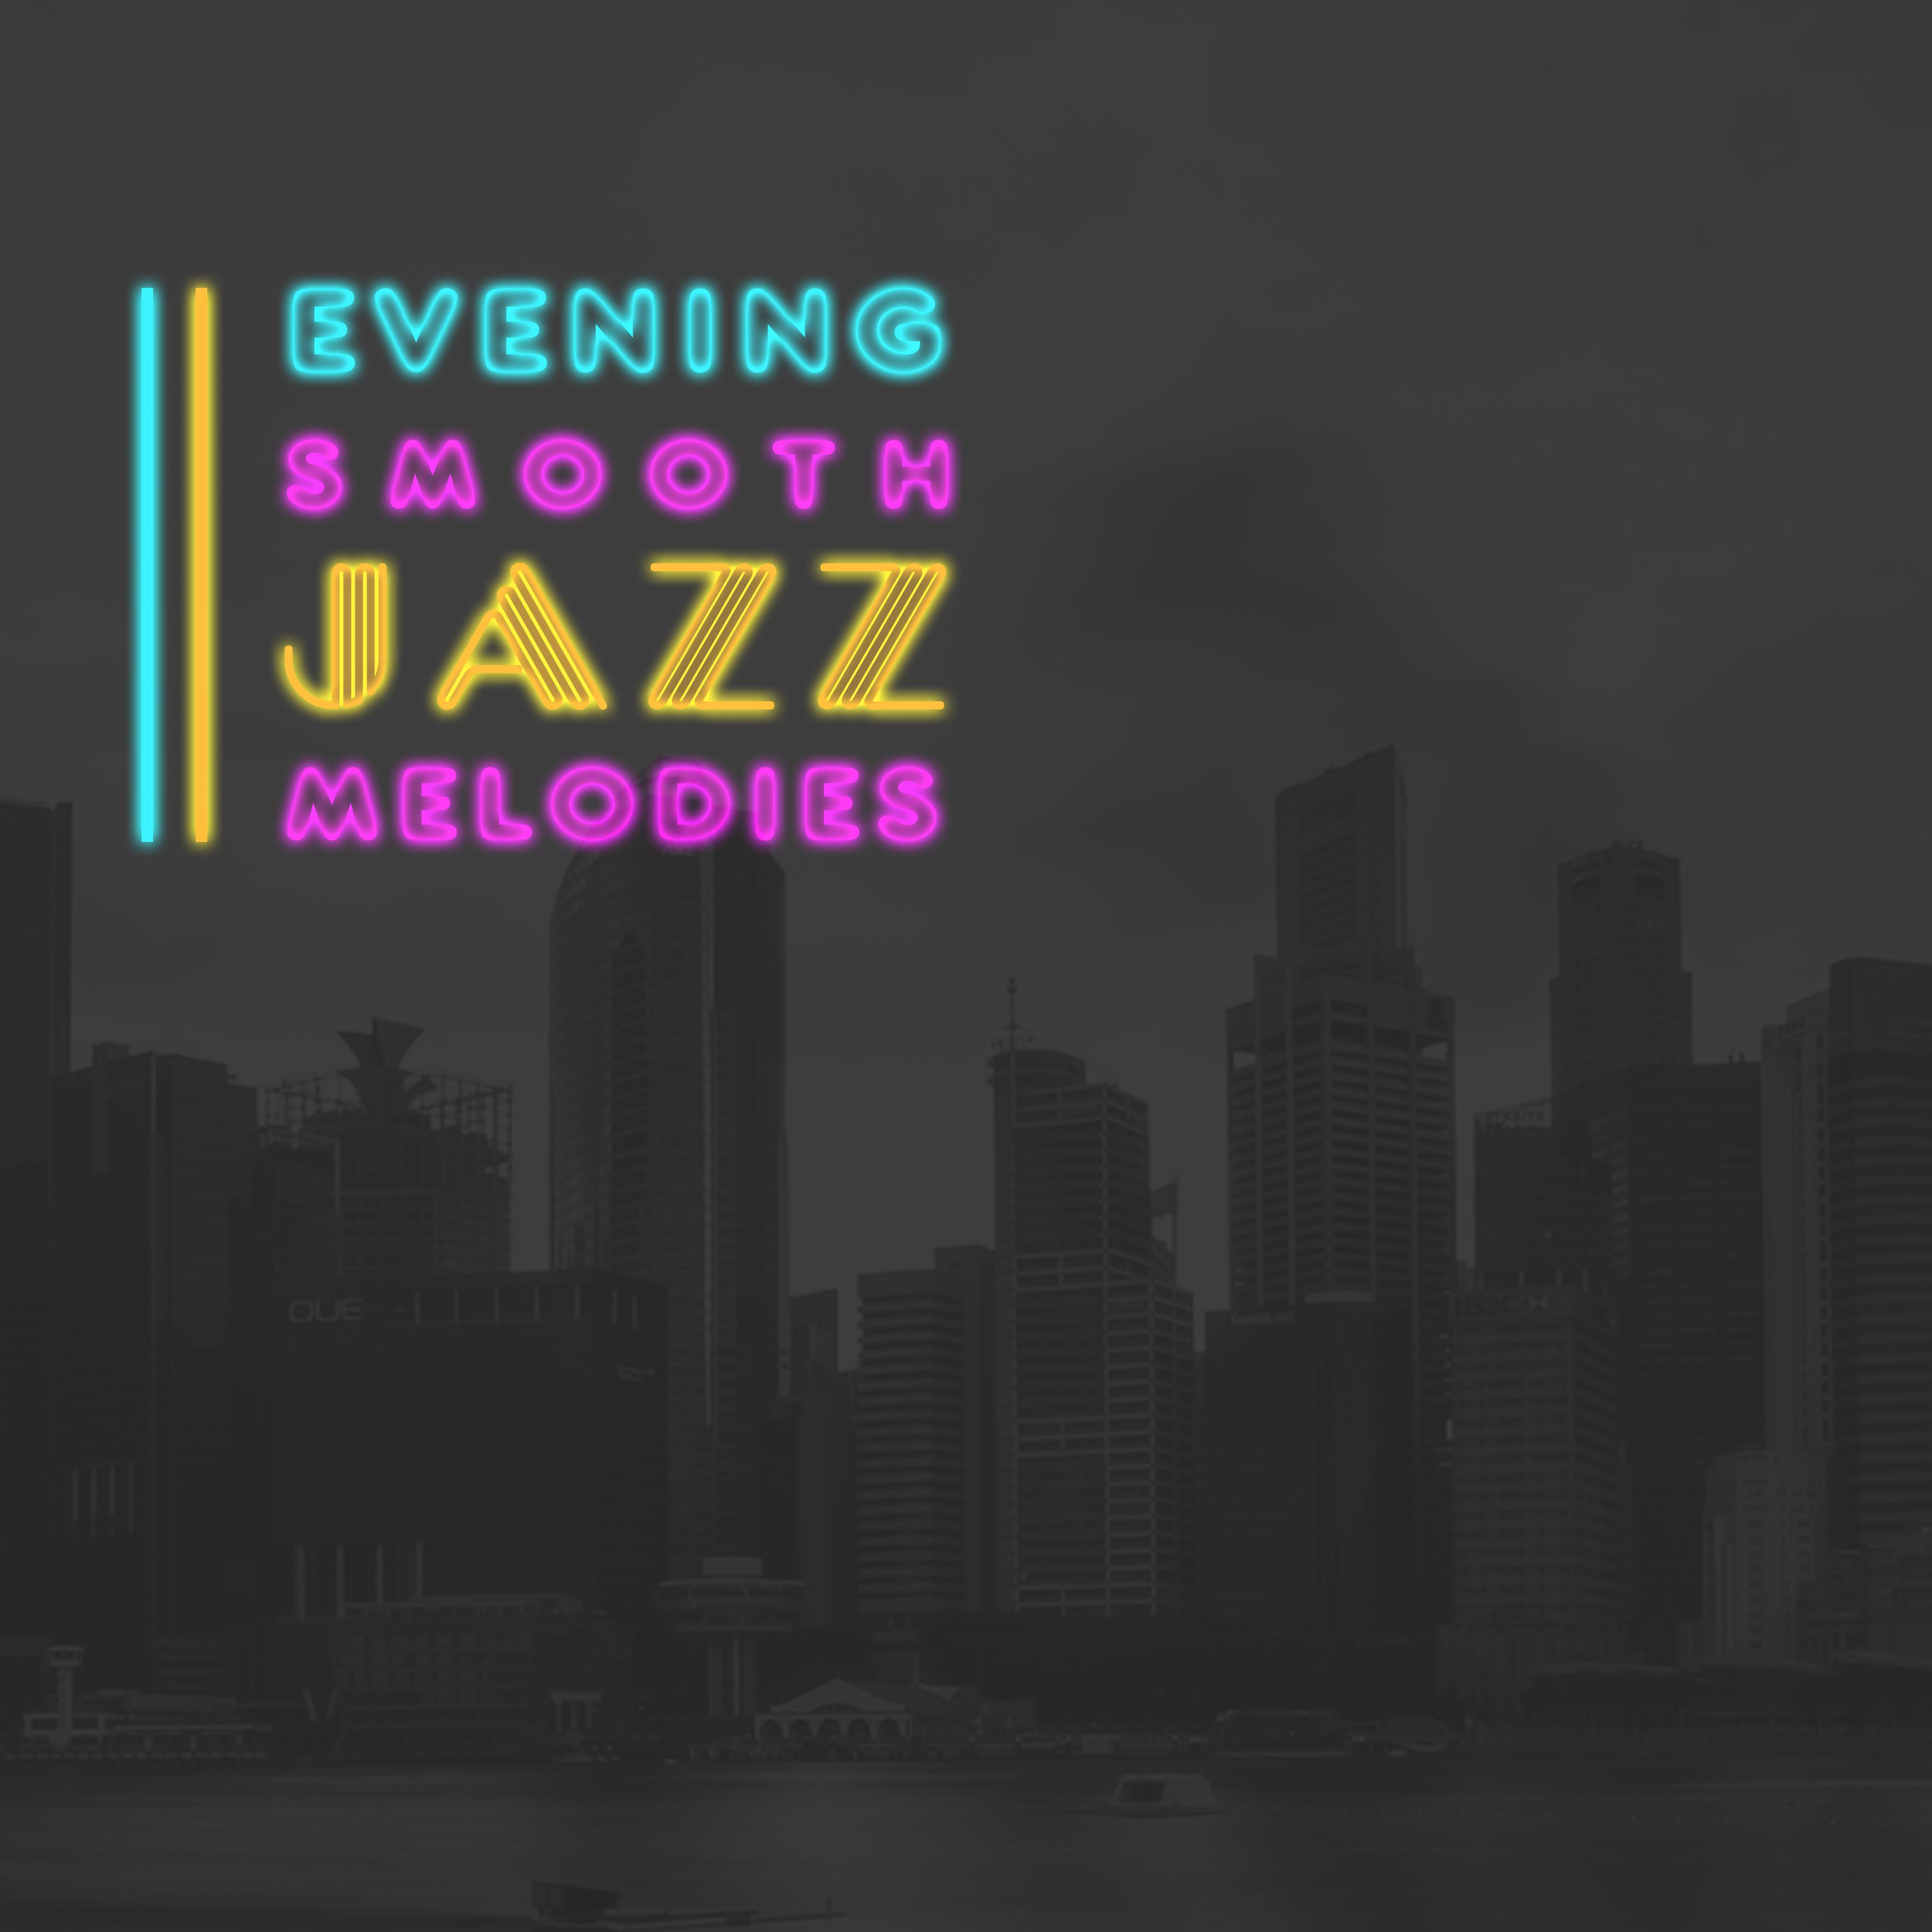 Evening Smooth Jazz Melodies